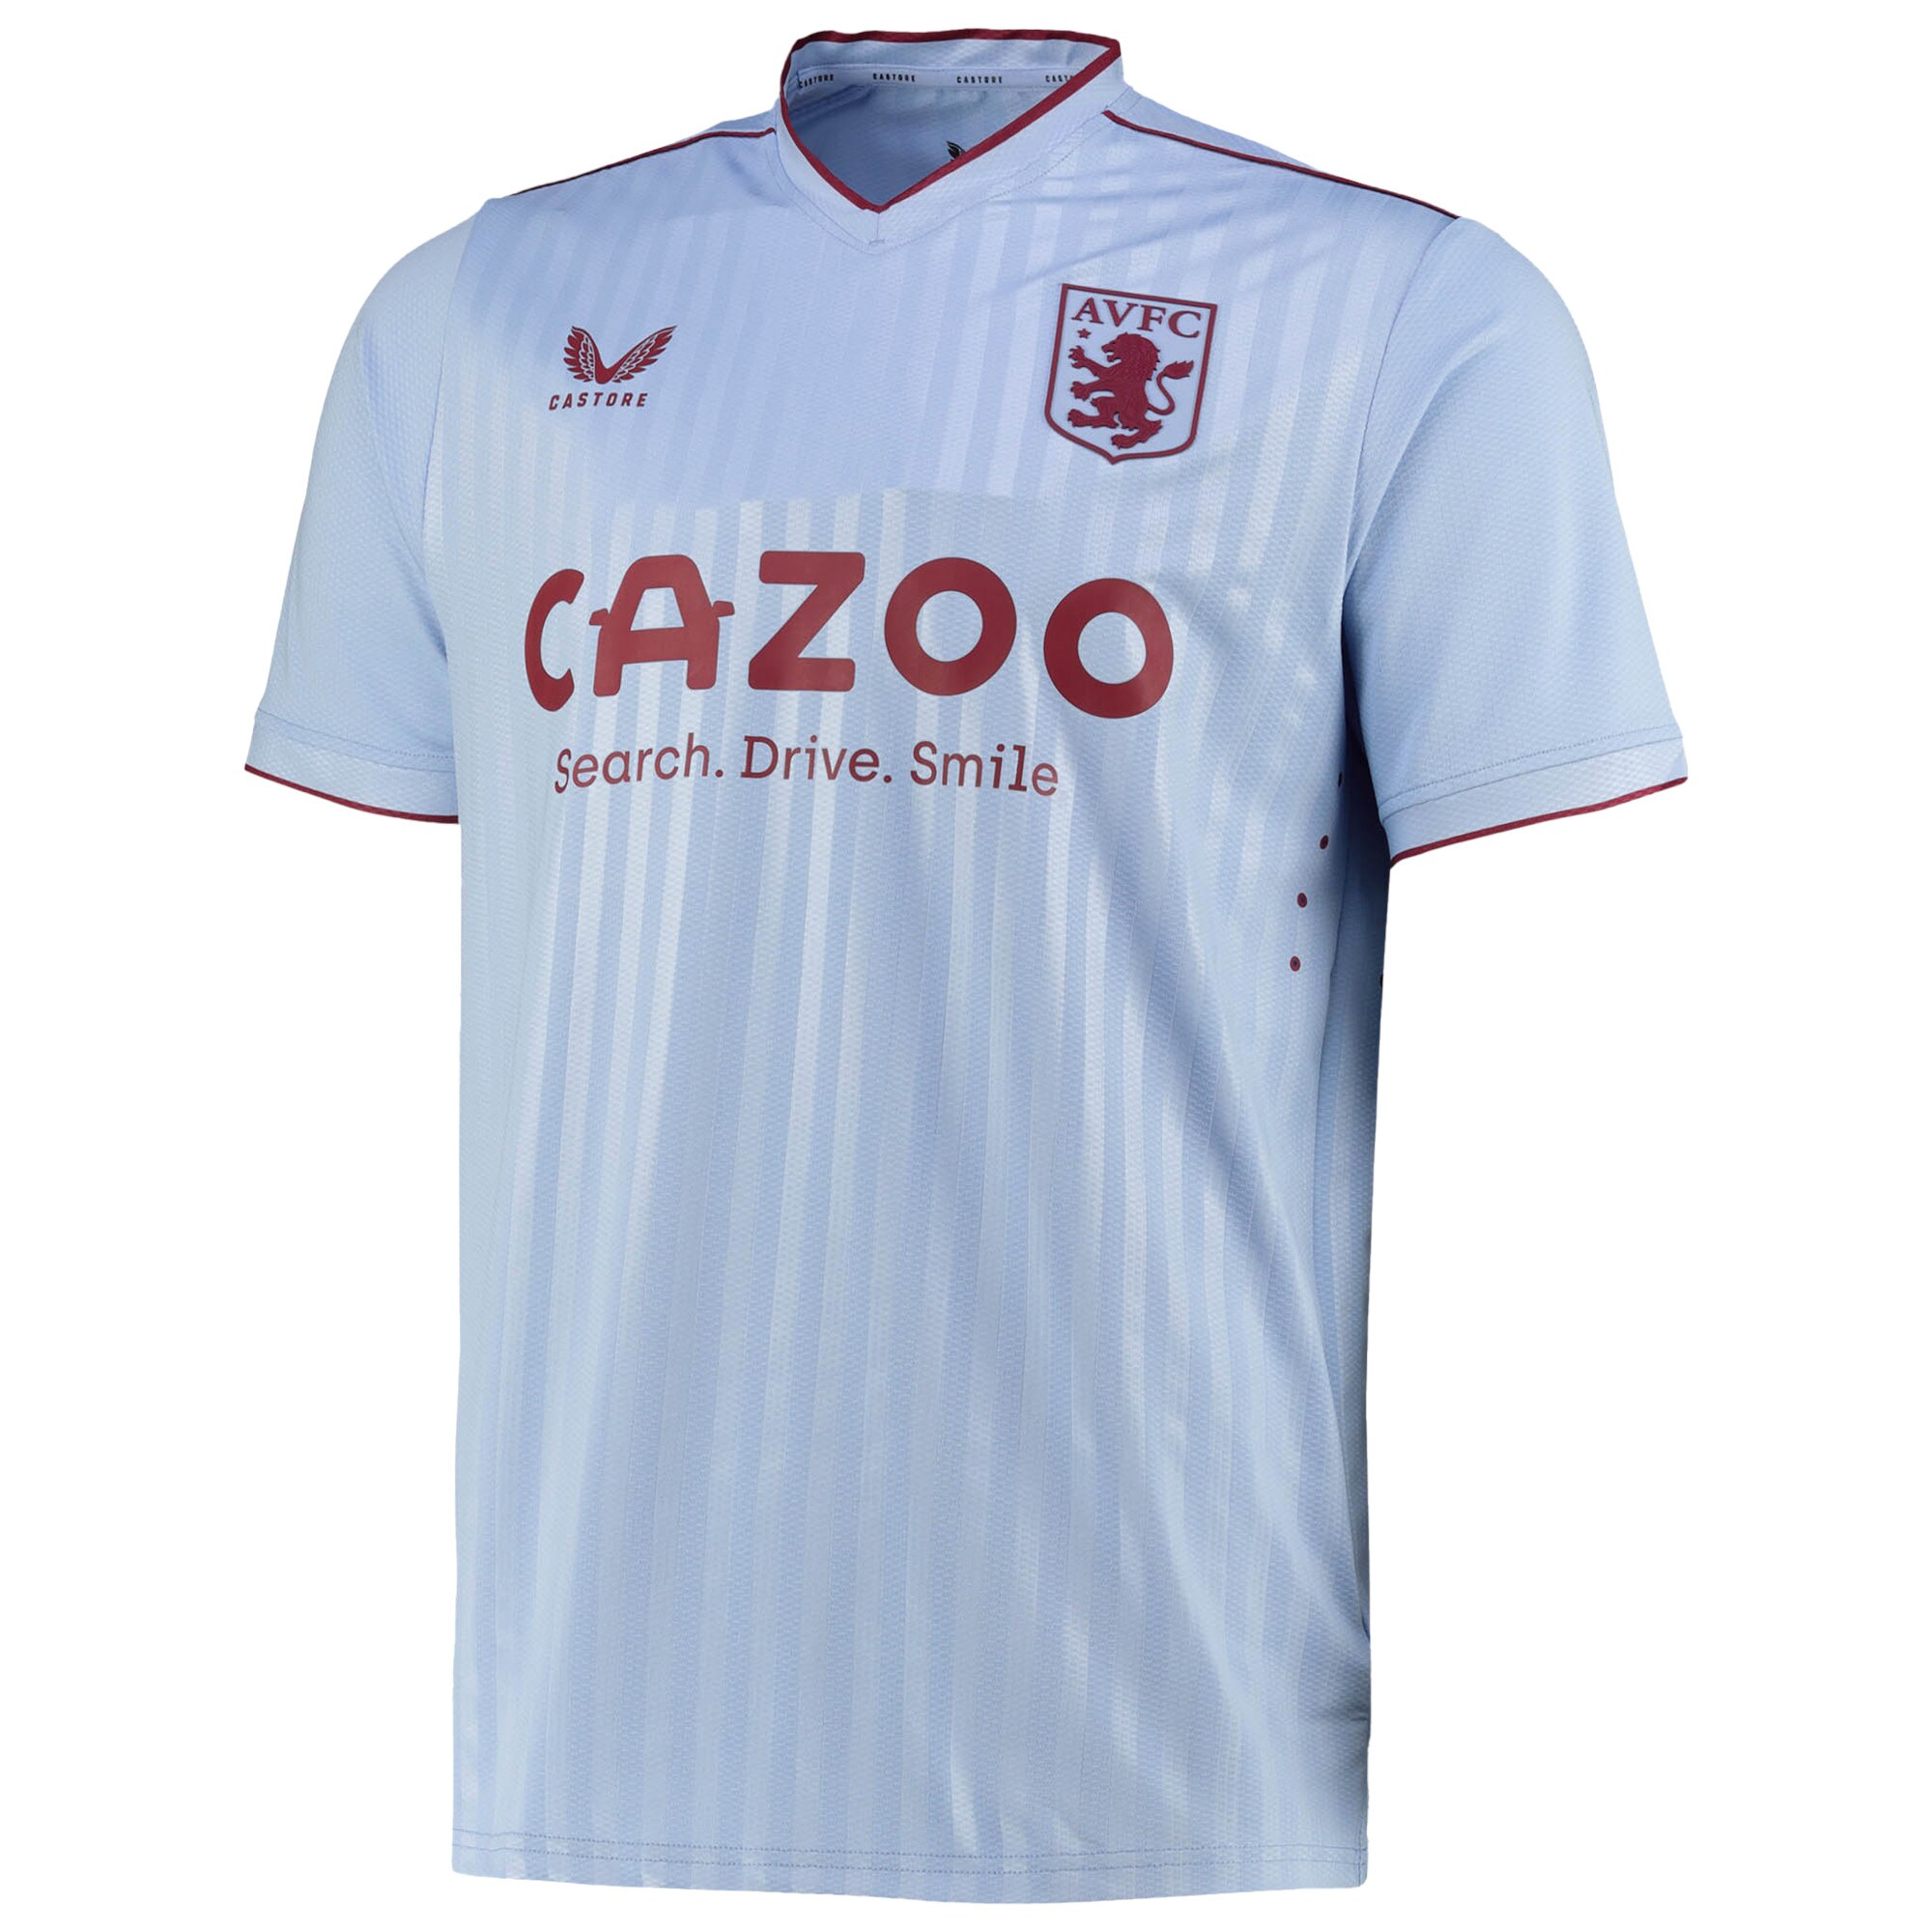 Aston Villa Away Pro Shirt 2022-23 with Feeney 59 printing